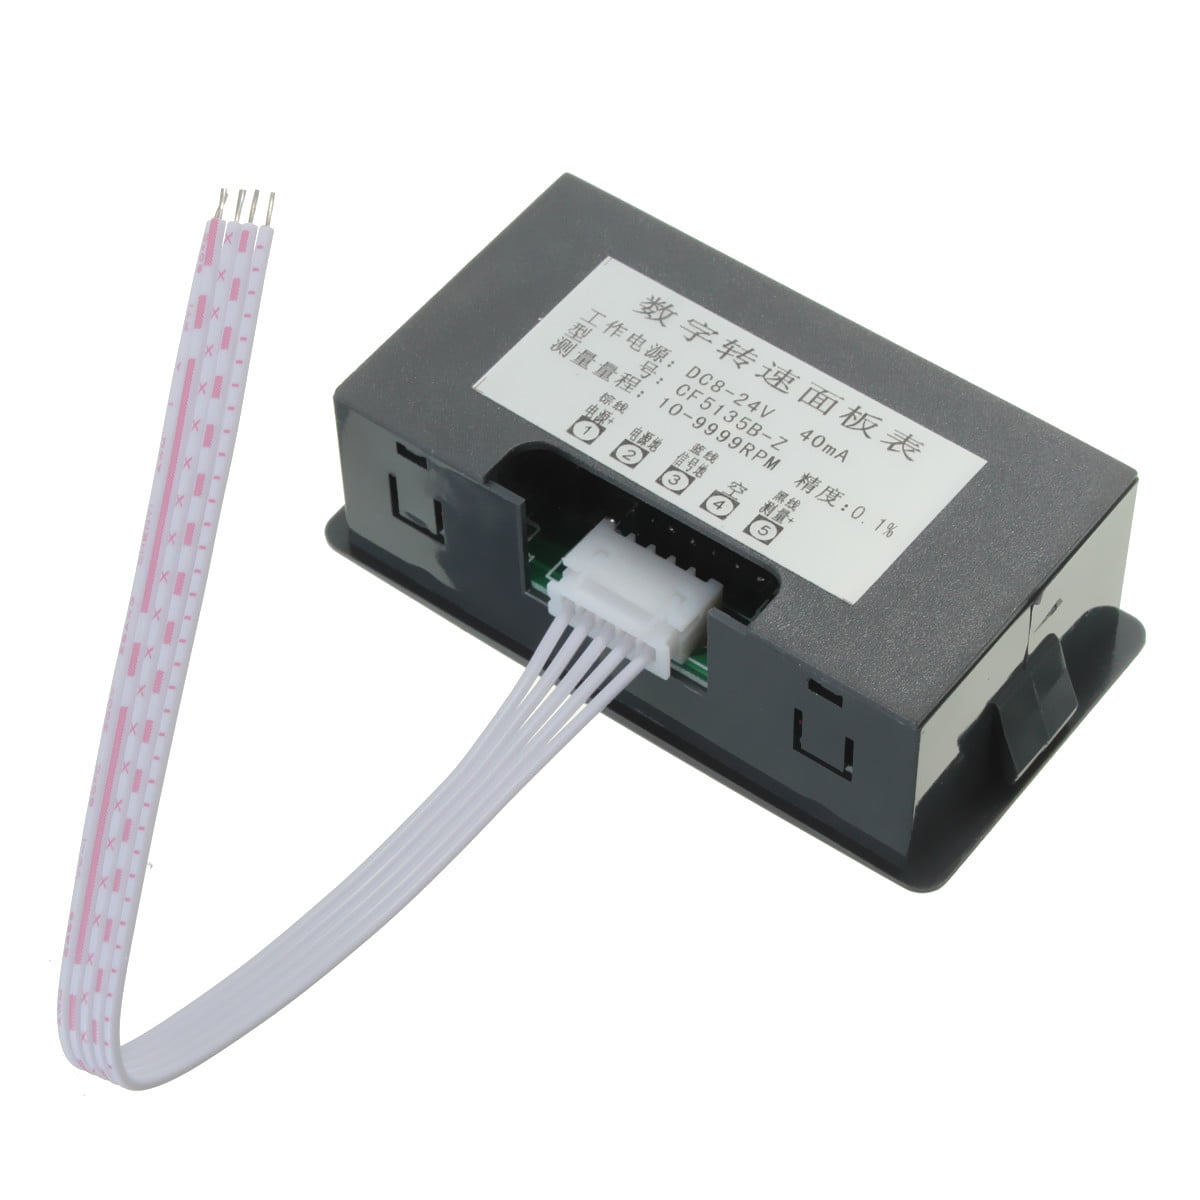 4 Digital LED Blue Tachometer RPM Speed Meter+Hall Proximity Switch Sensor ND